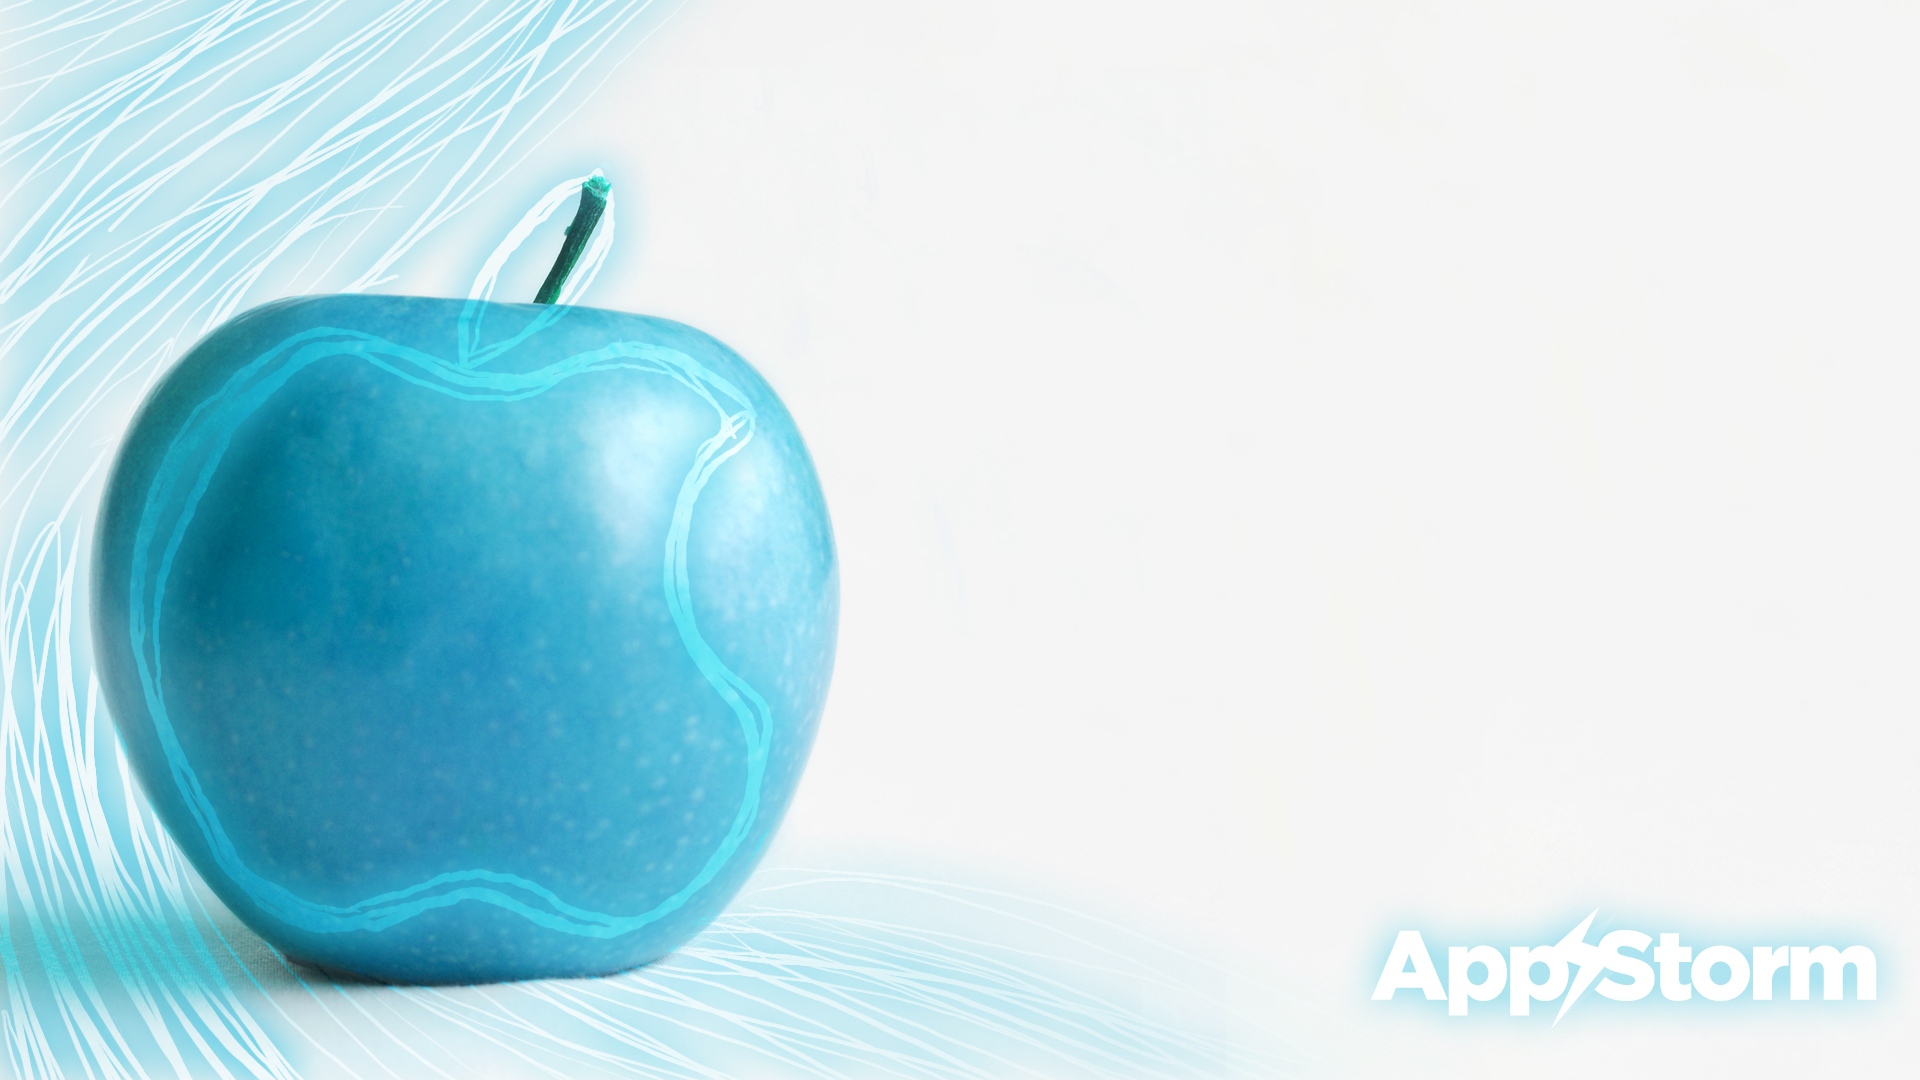 Обои яблоко apple аpp storm на рабочий стол